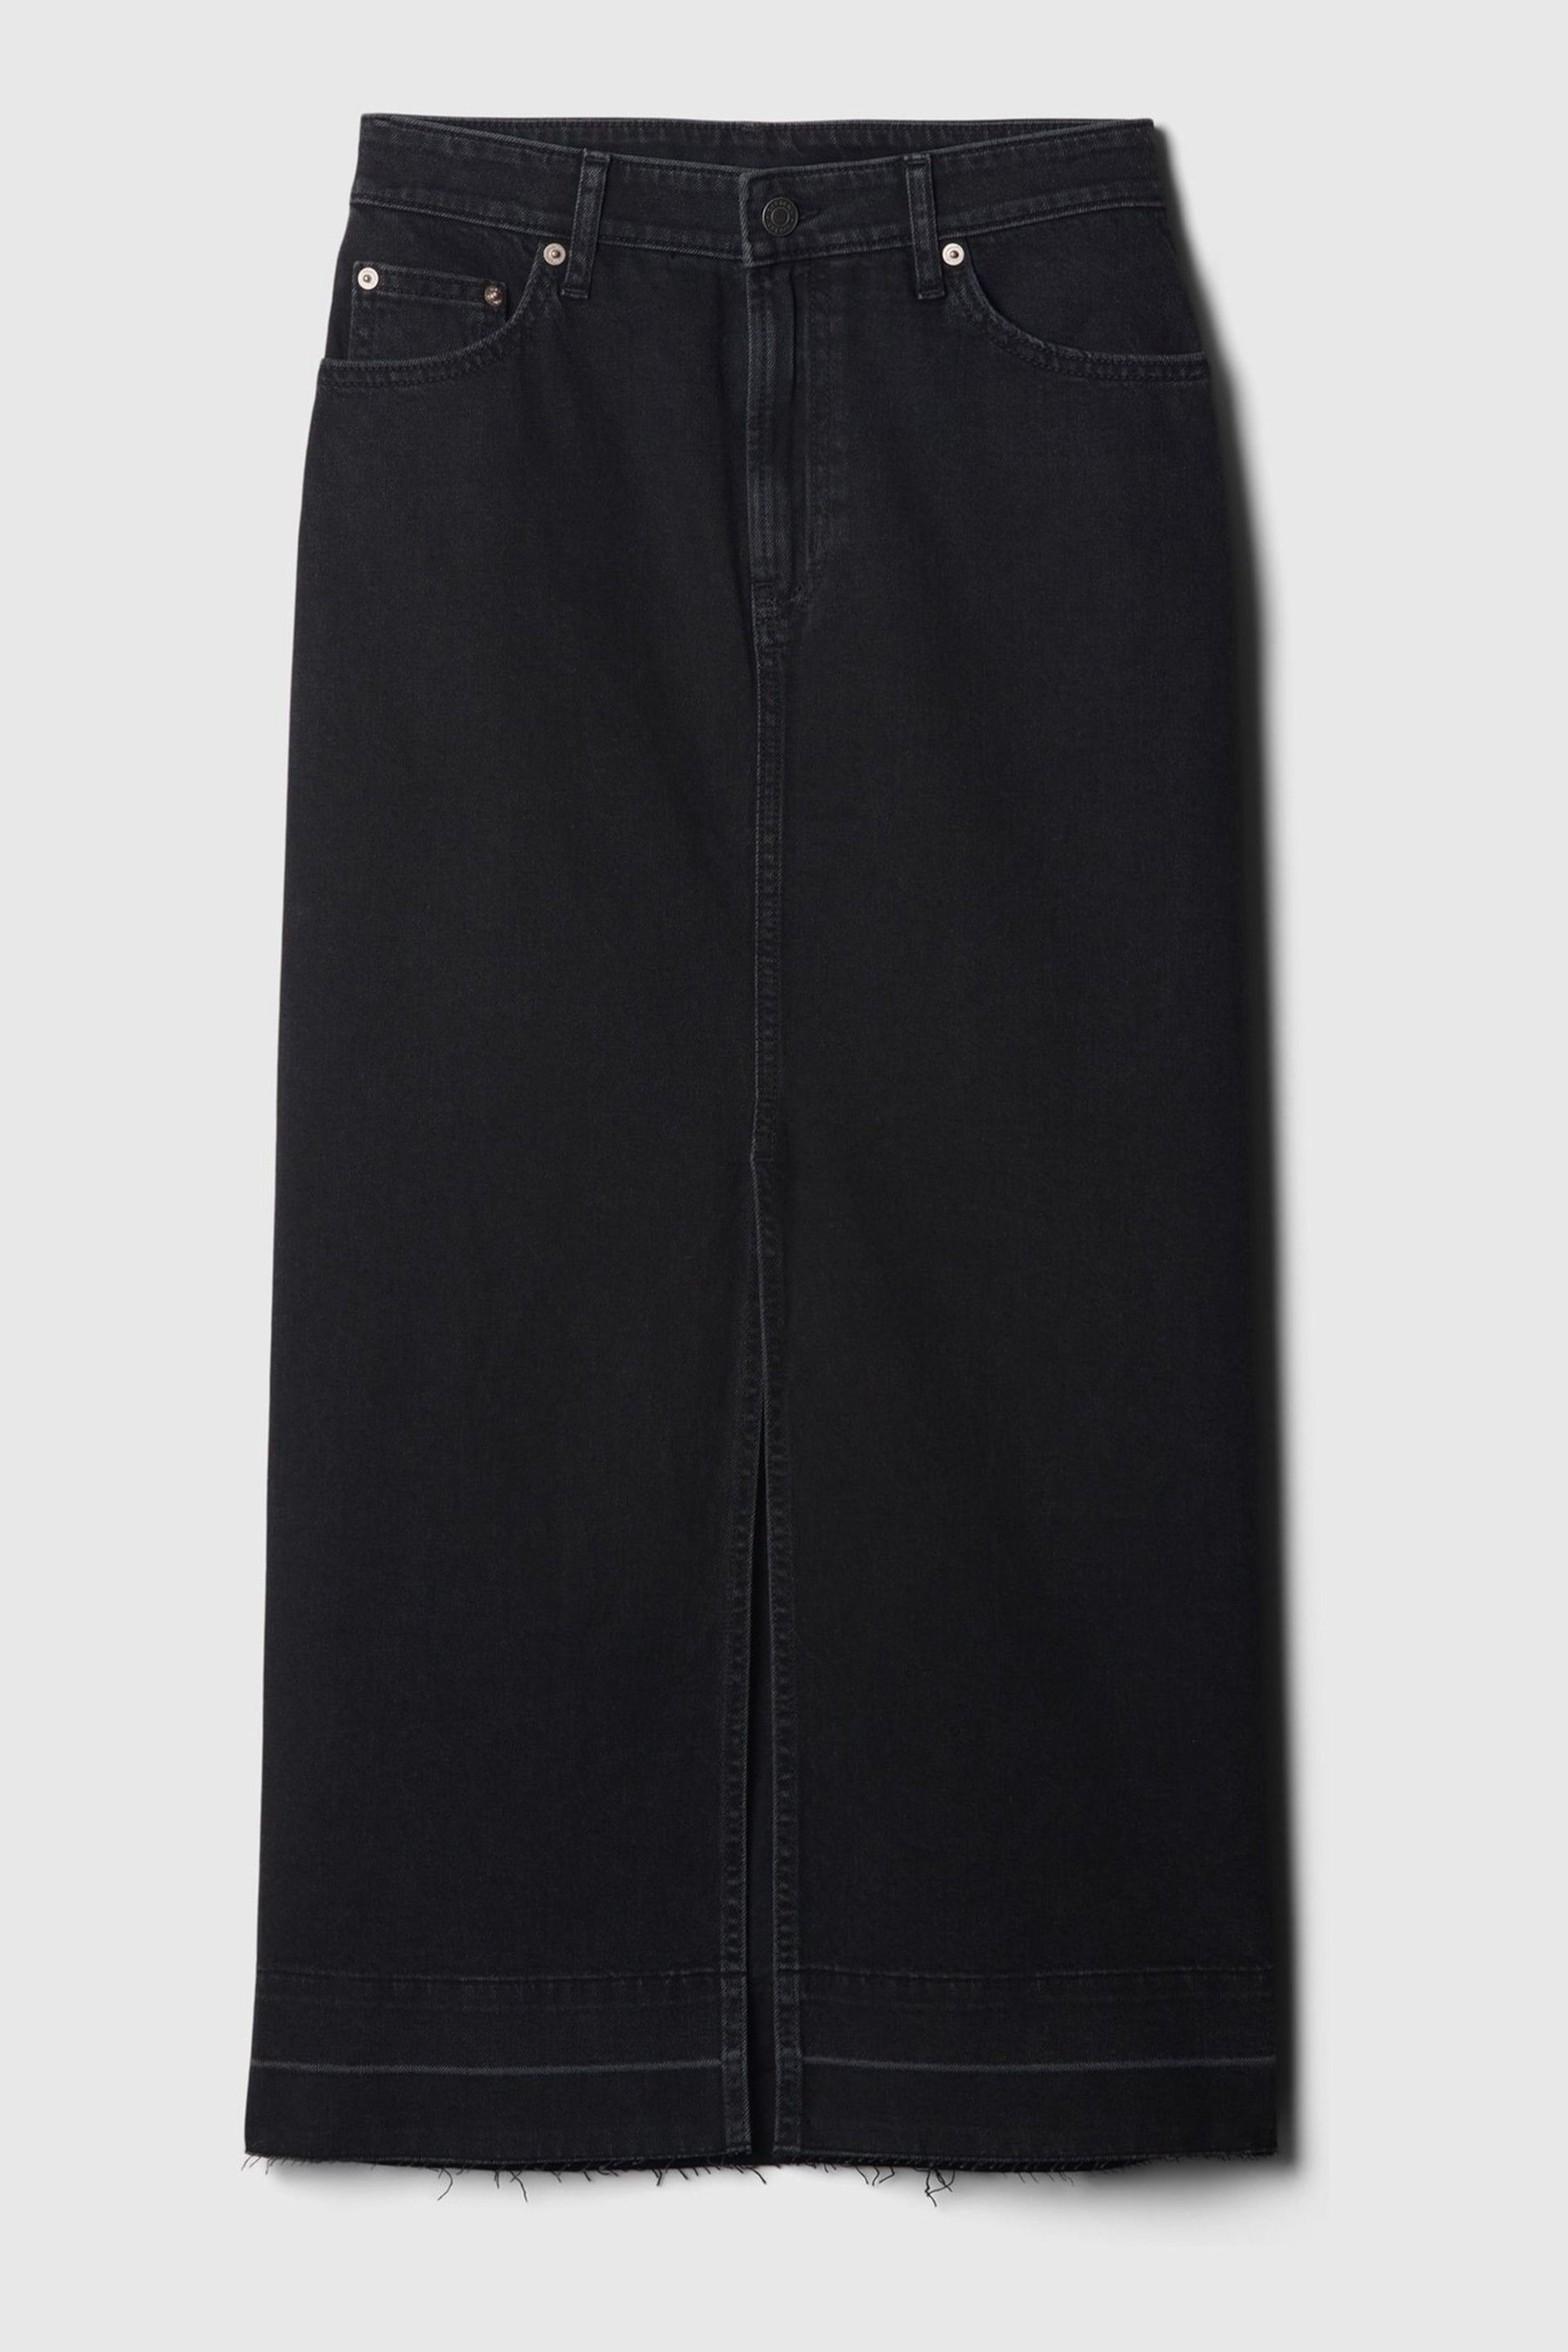 Gap Black Denim Midi Skirt - Image 3 of 5